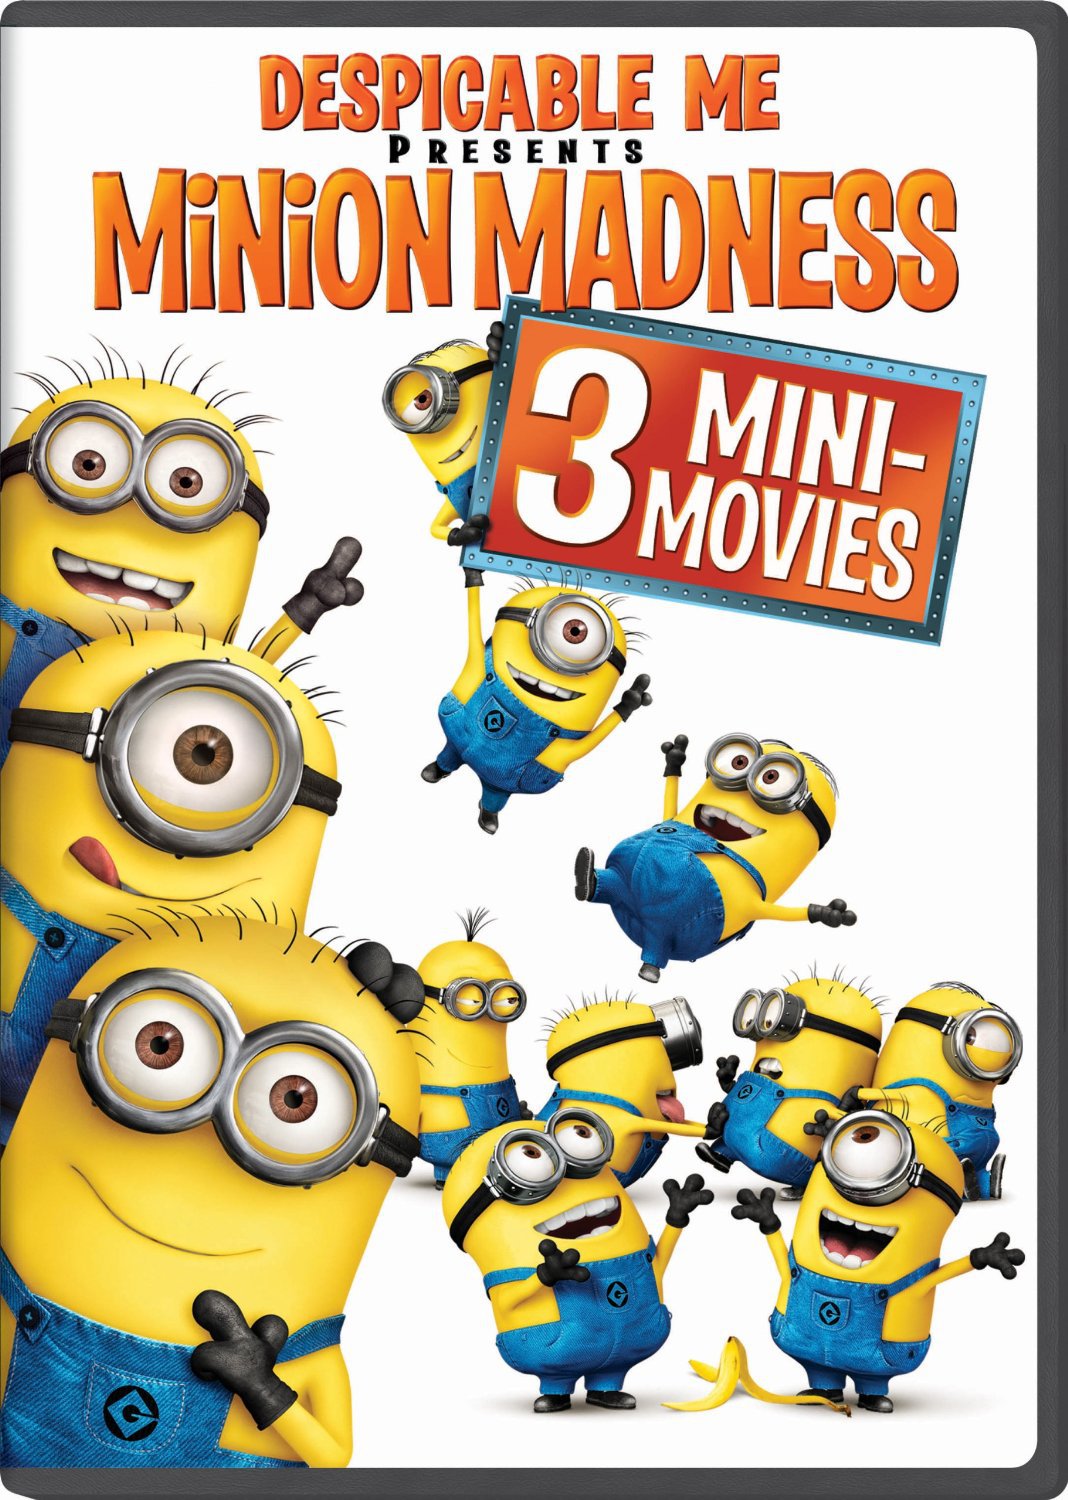 Minion Madness